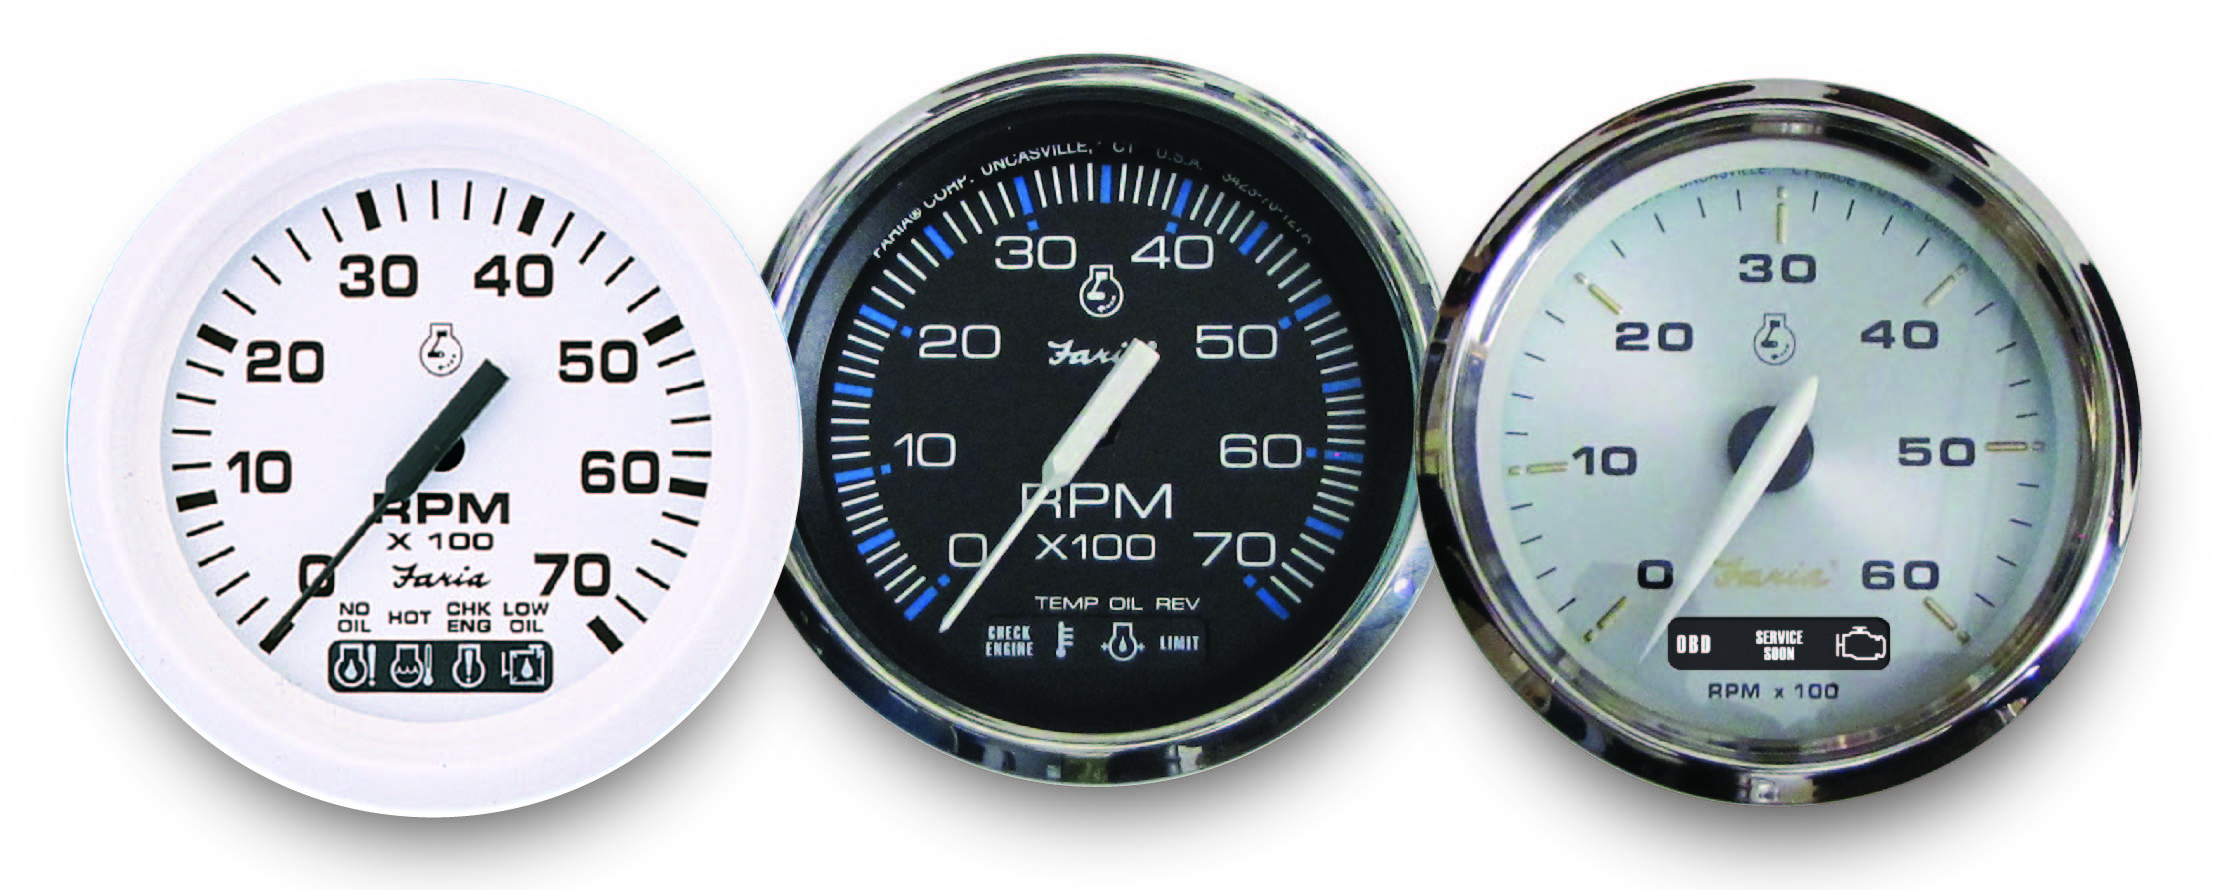 Yamaha outboard motor tachometer